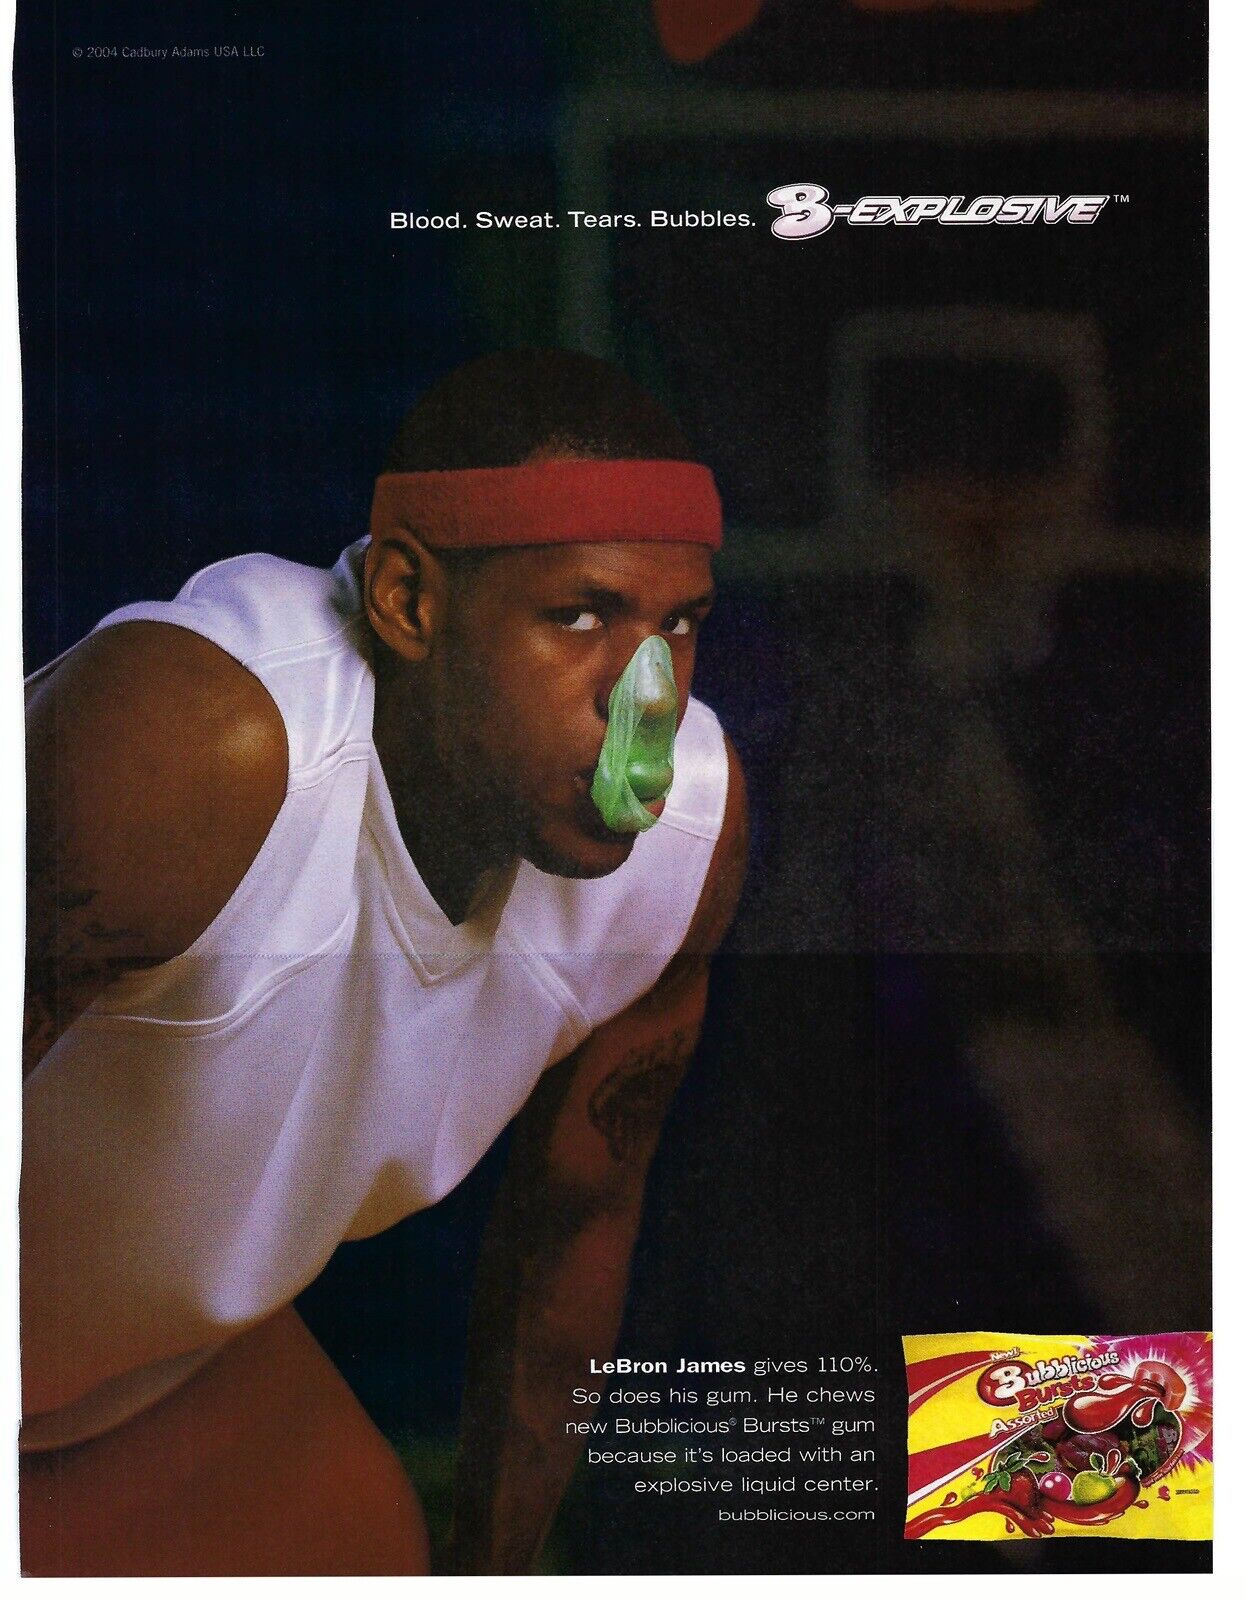 2004 Bubblicious Bursts Gum LeBron James Bubbles NBA Magazine Print Ad/Poster